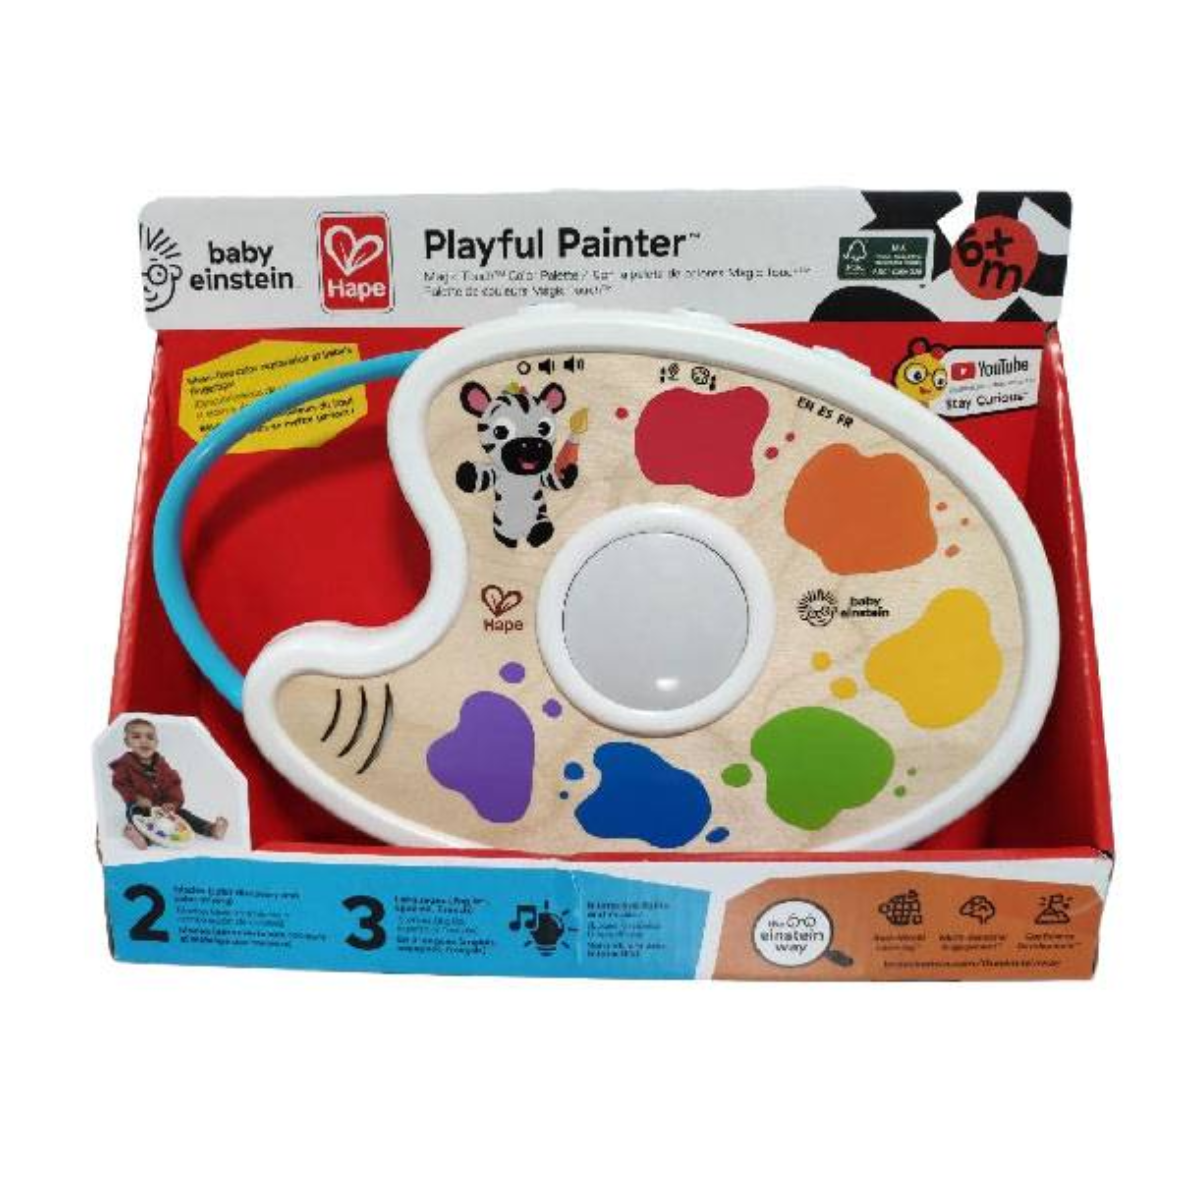 Playful Painter